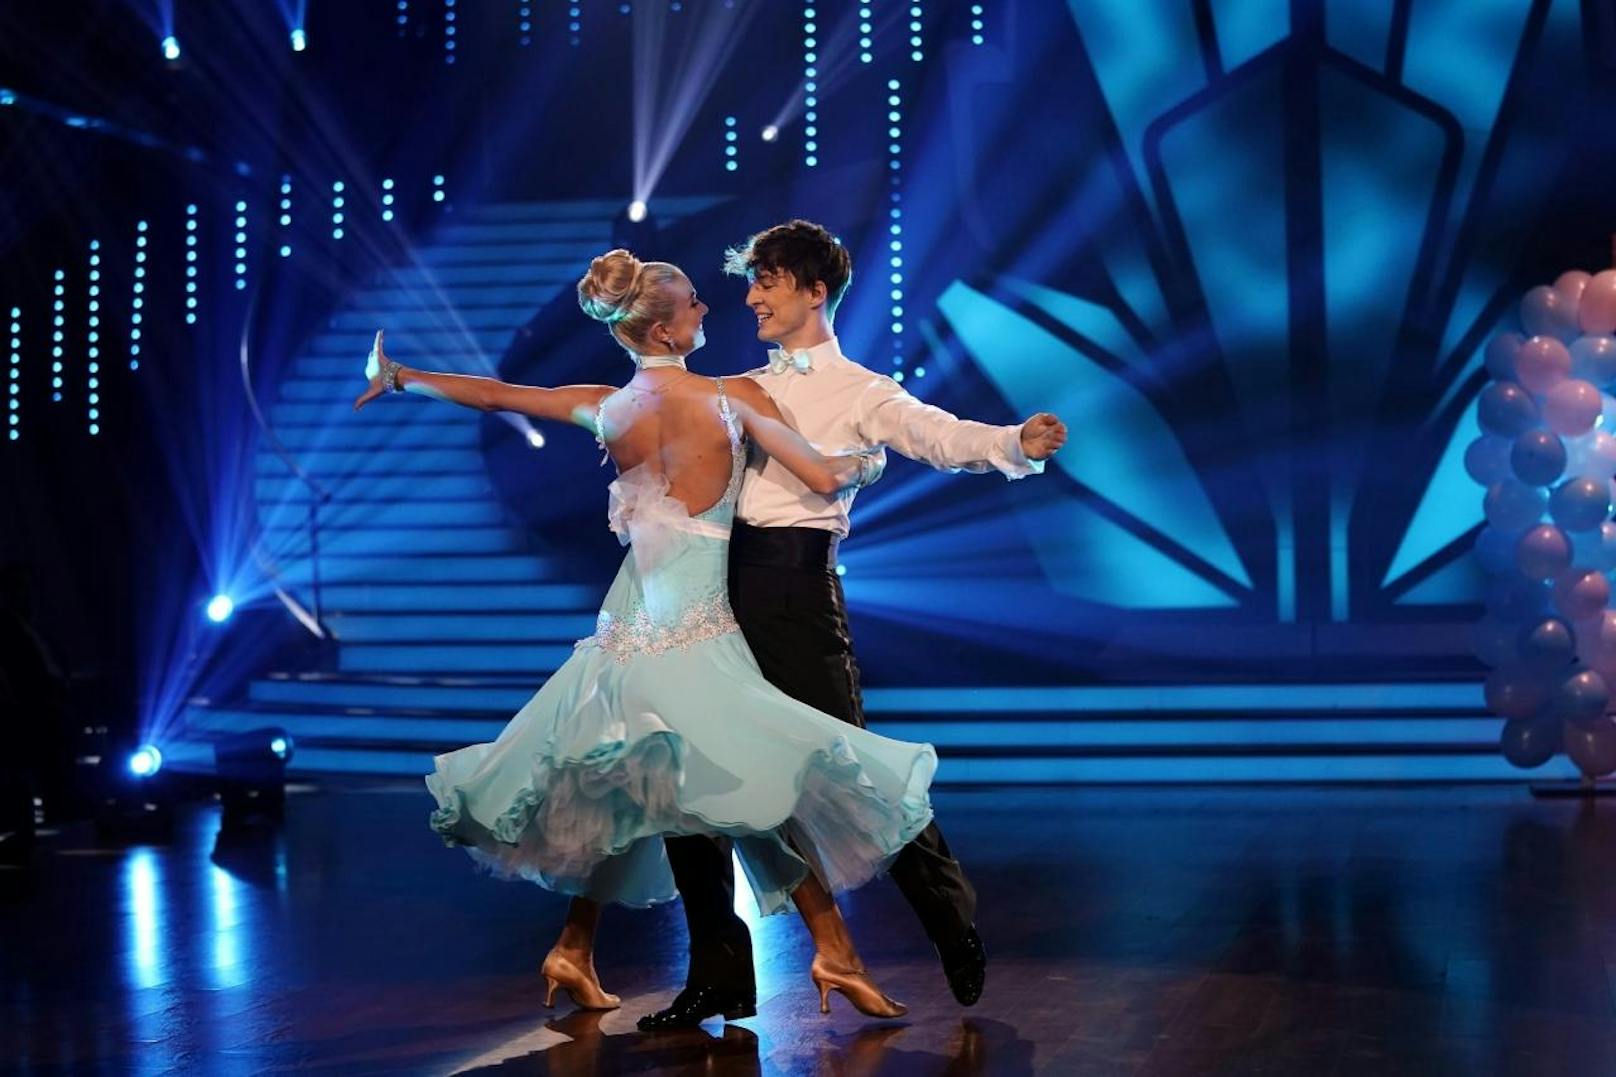 Roman Lochmann und Katja Kalugina tanzen Slowfox.

